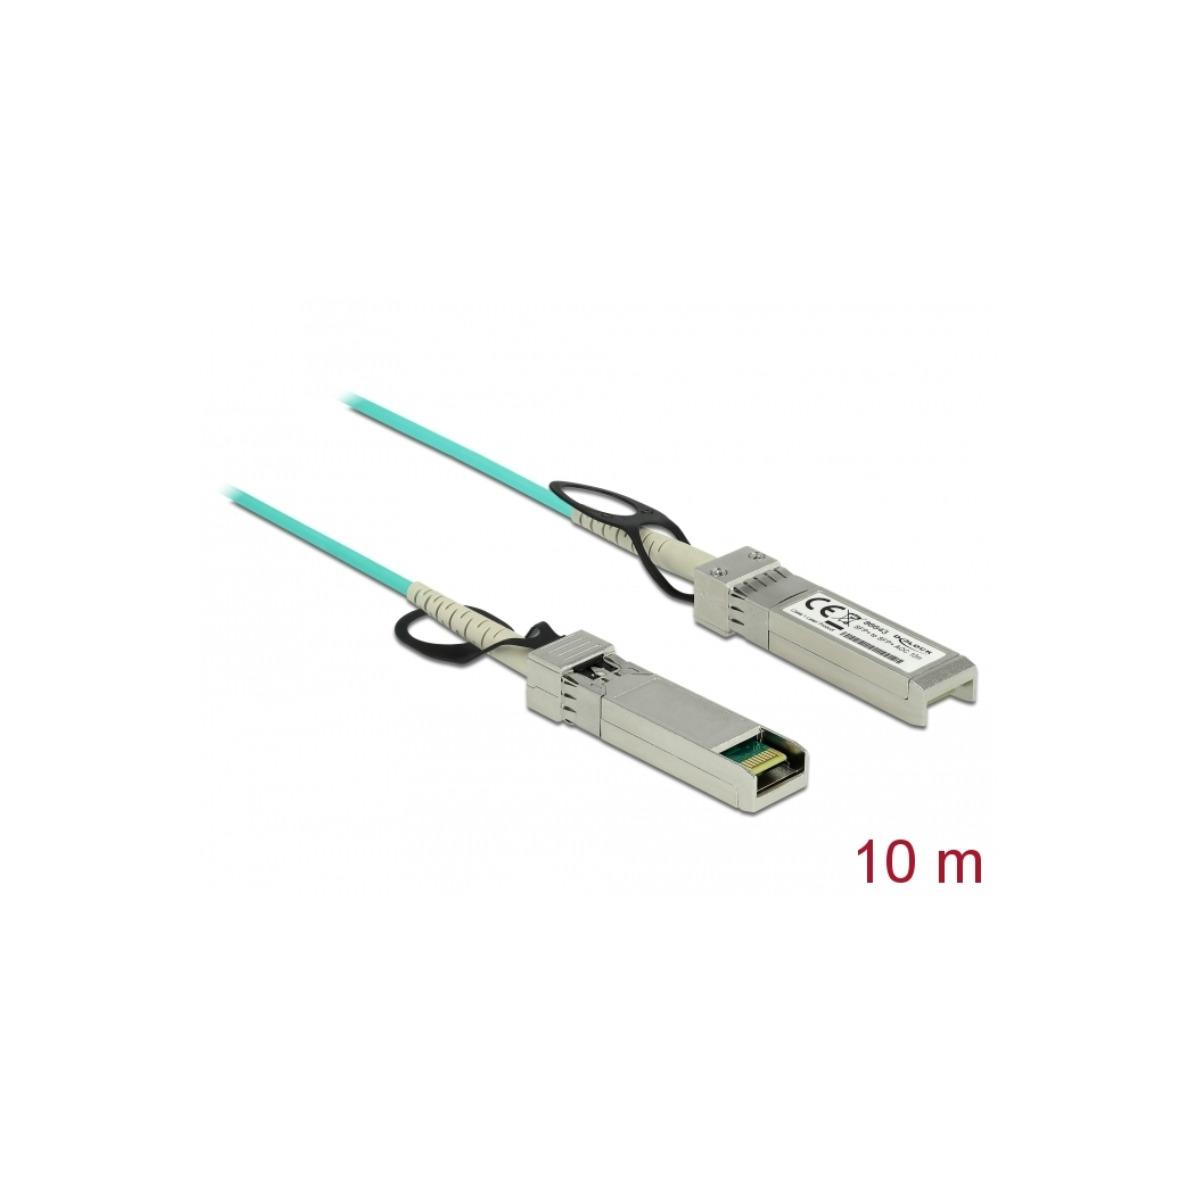 DELOCK 86643 SFP+ Direct Cable Attachment Türkis (AOC), Active